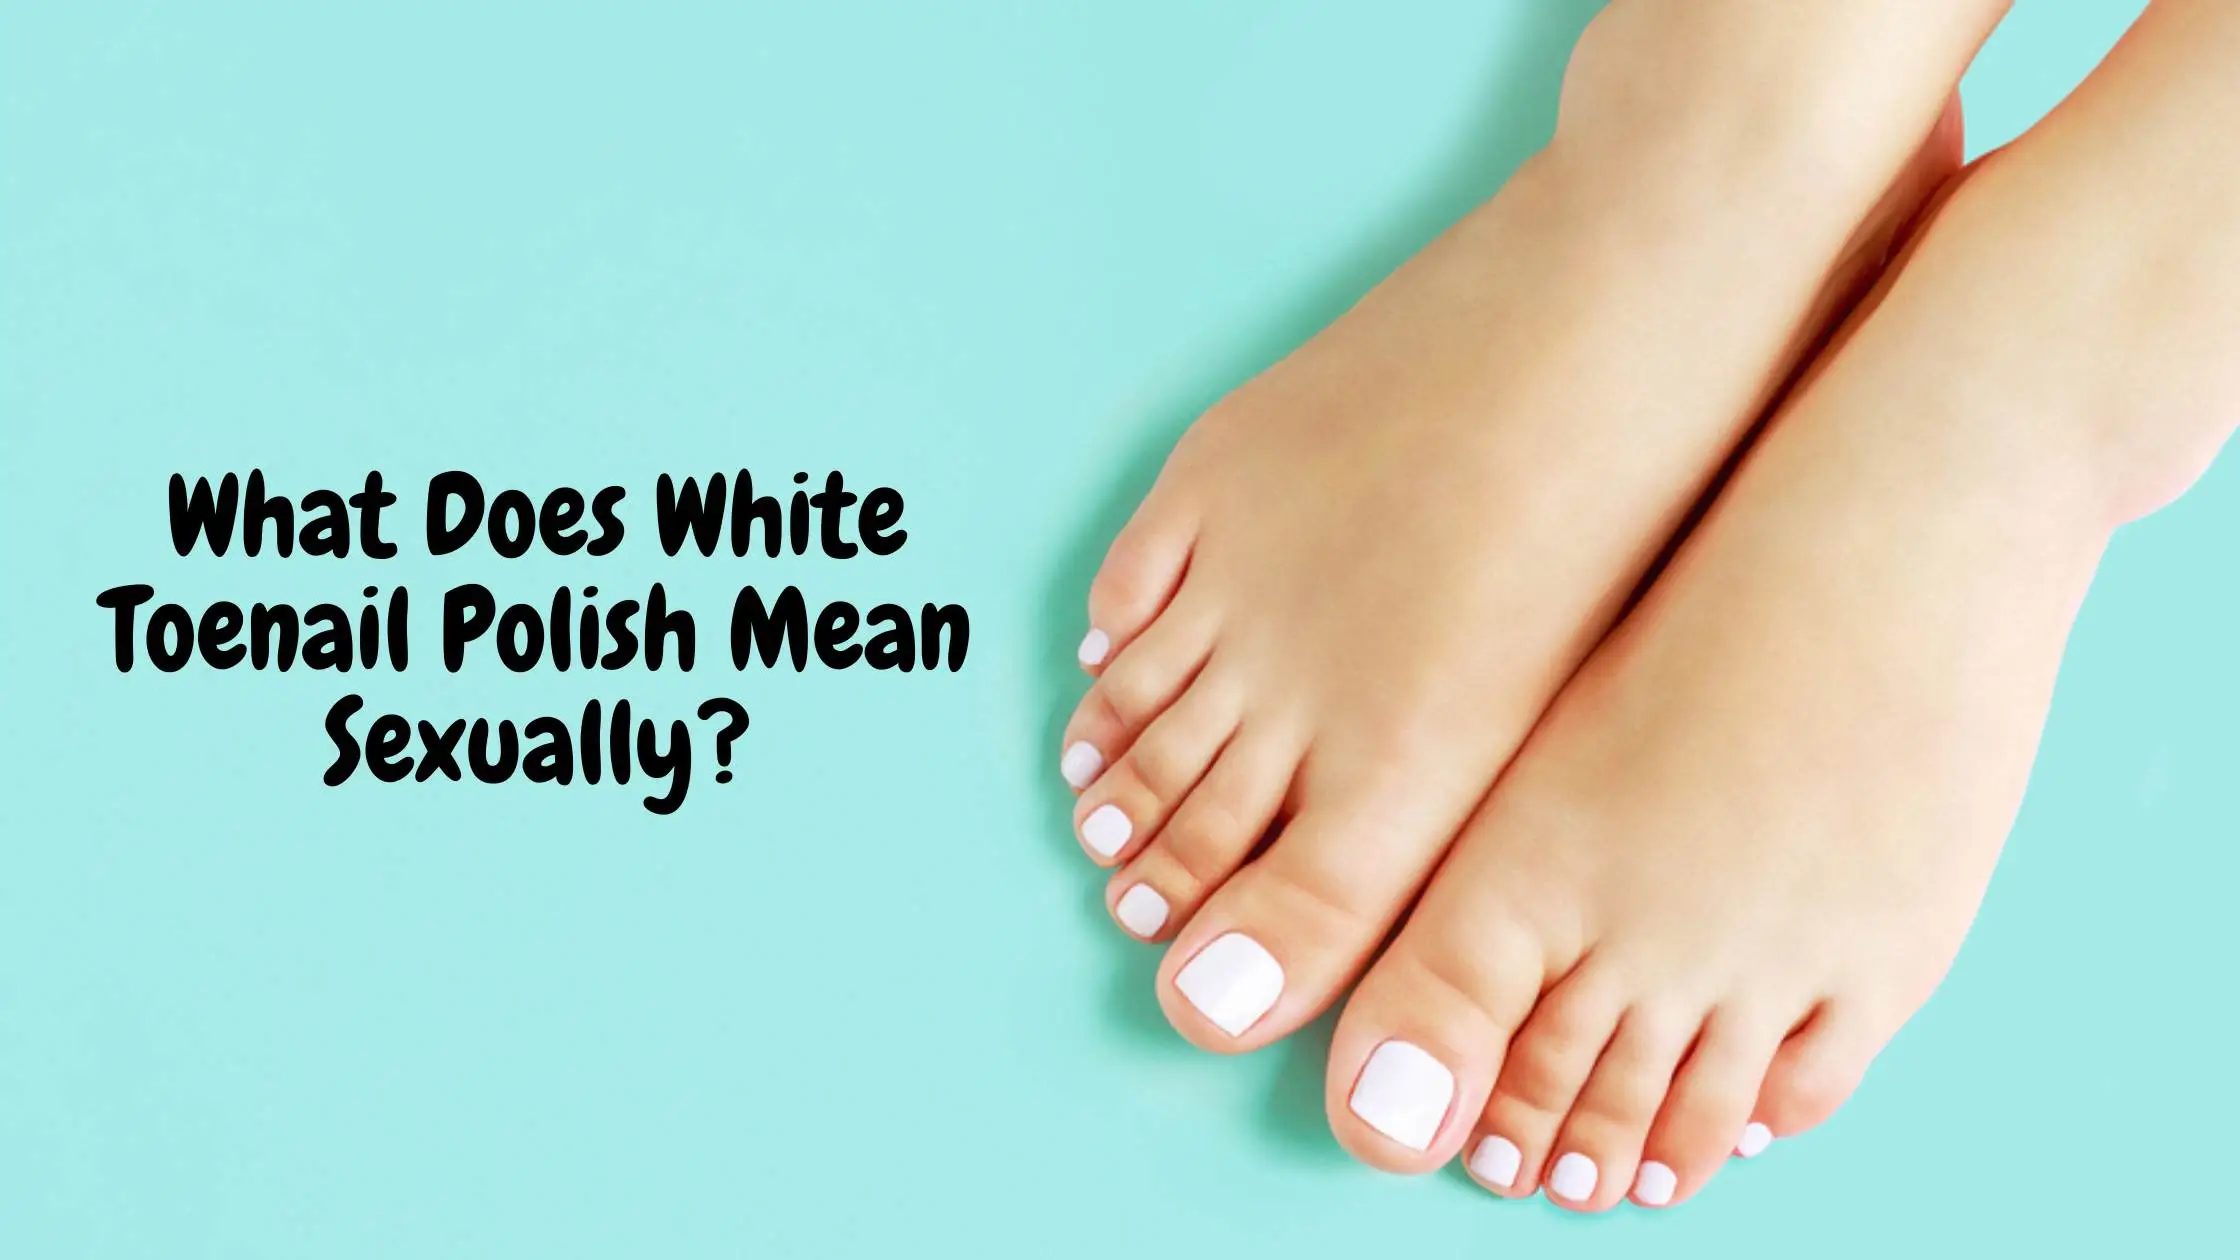 What Does White Toenail Polish Mean Sexually?